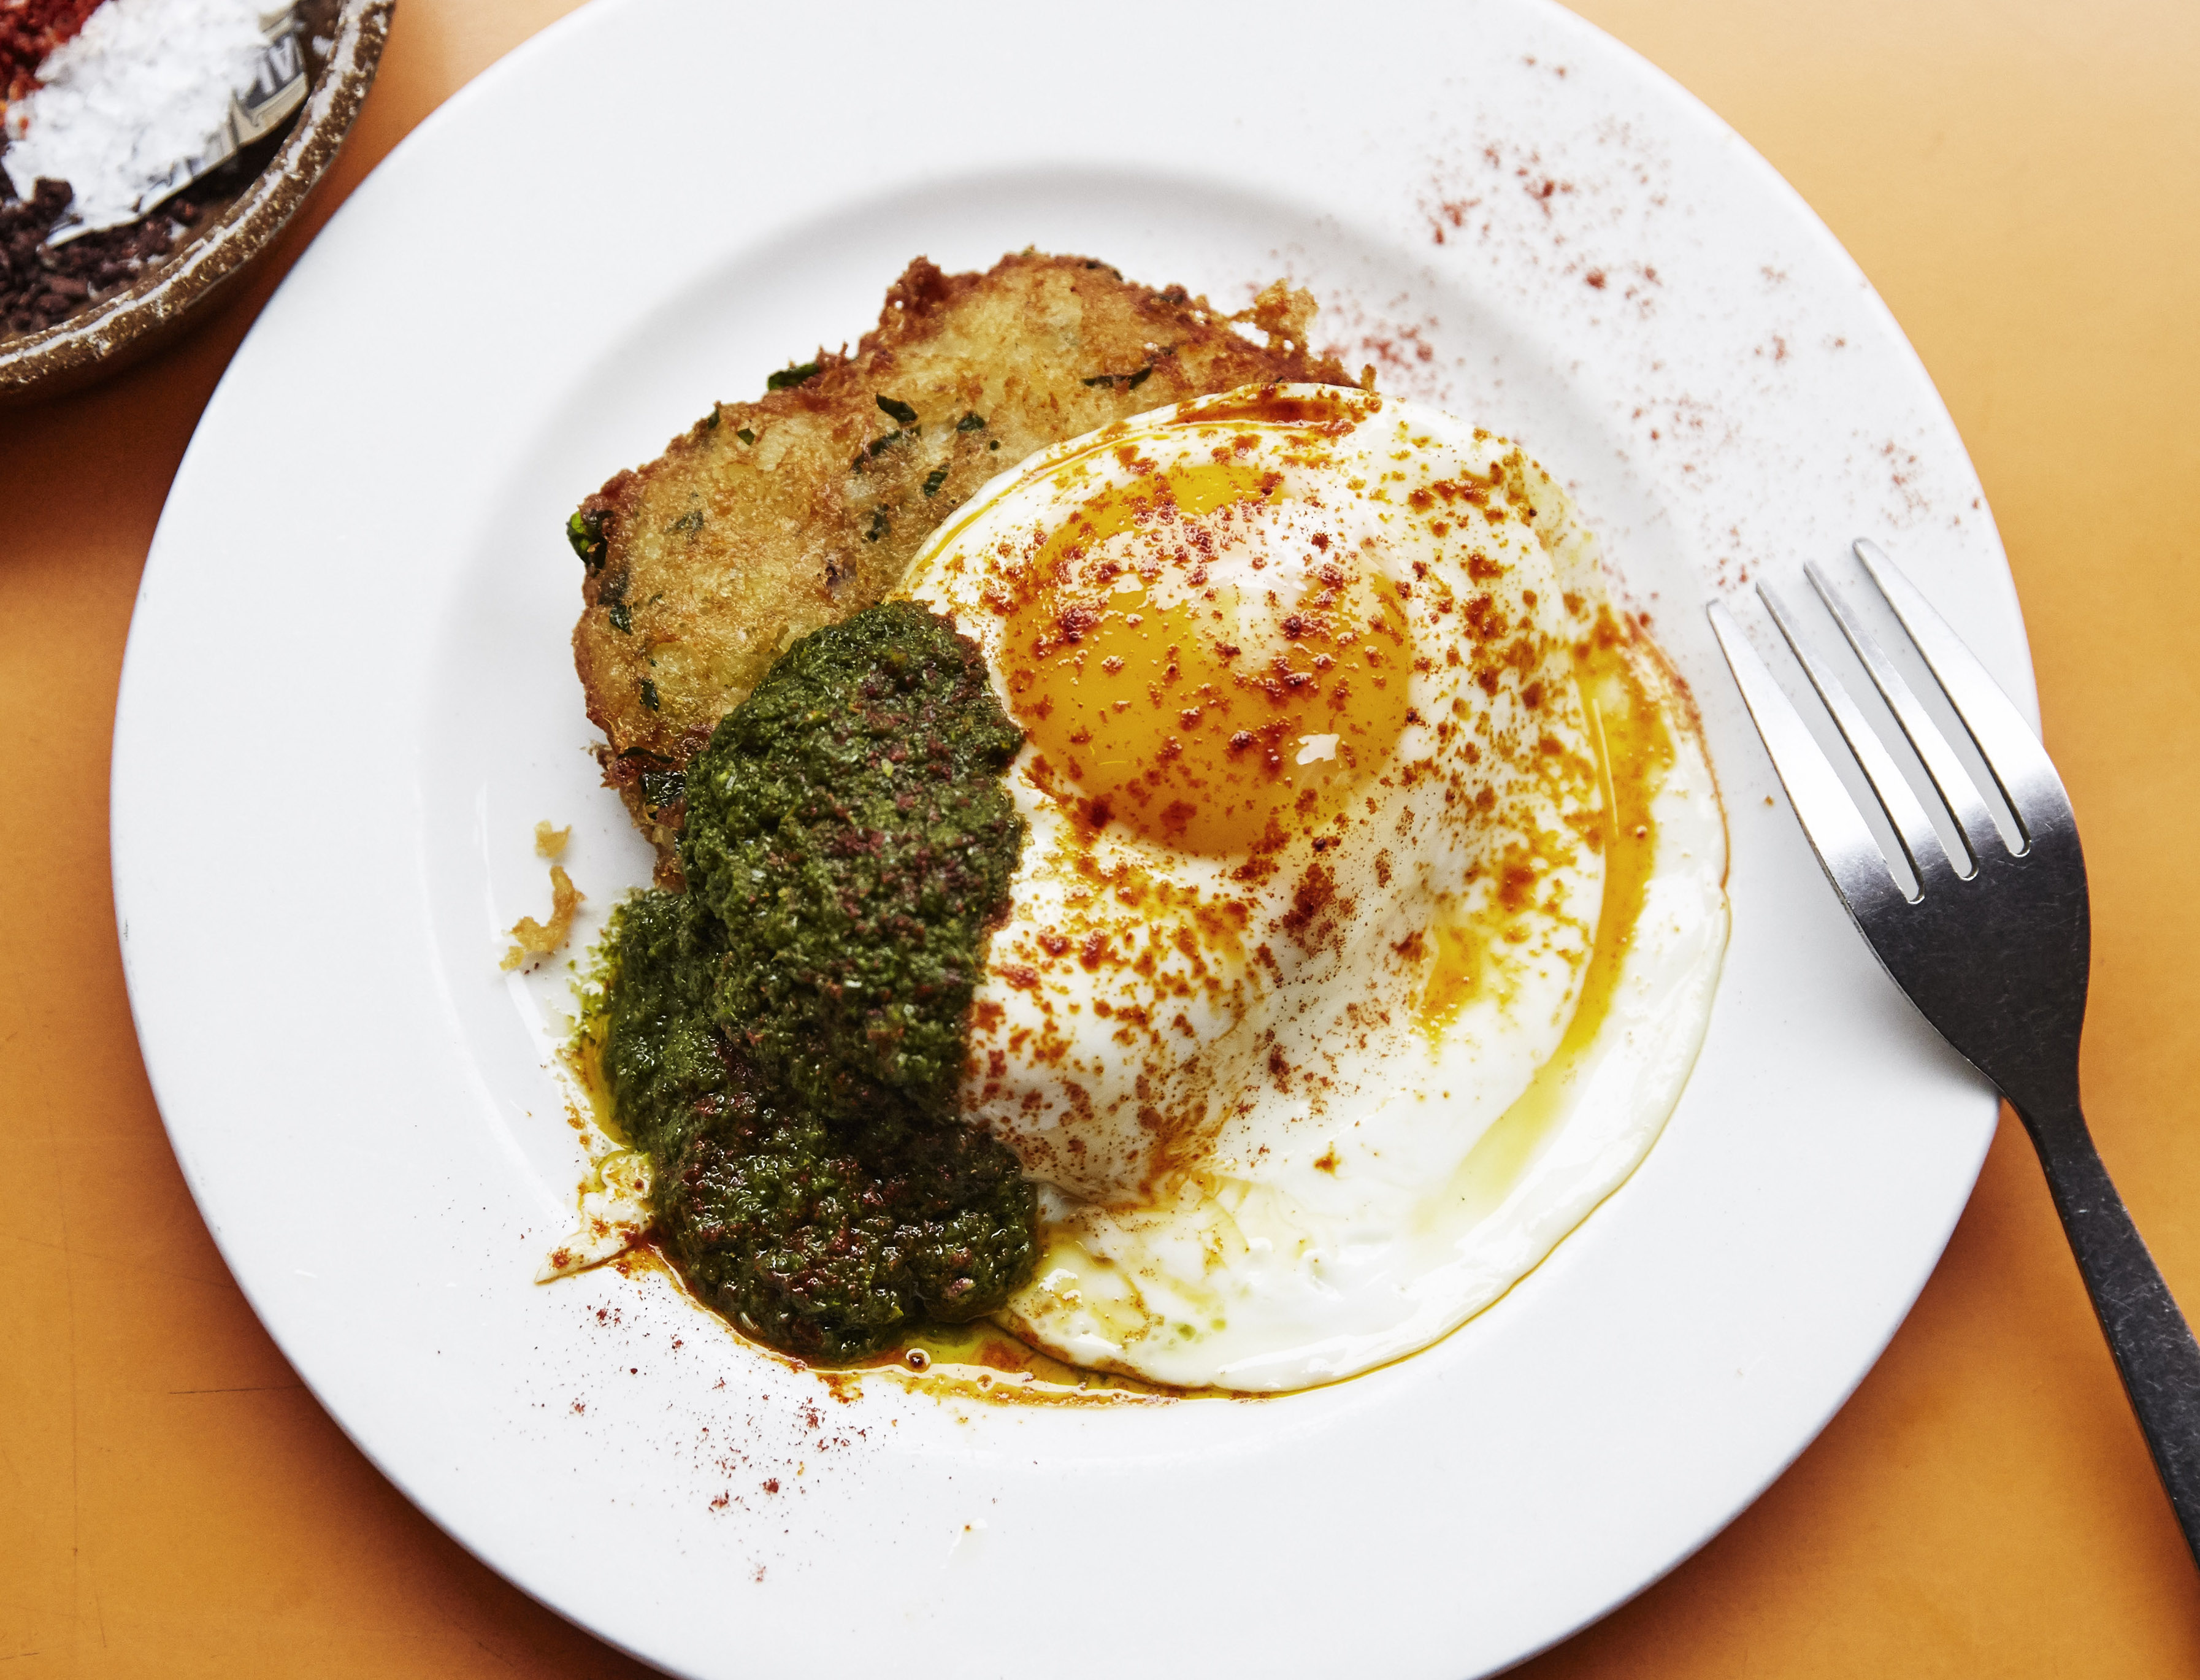 London’s best brunch includes fried egg on an orange table at Morito Hackney Road